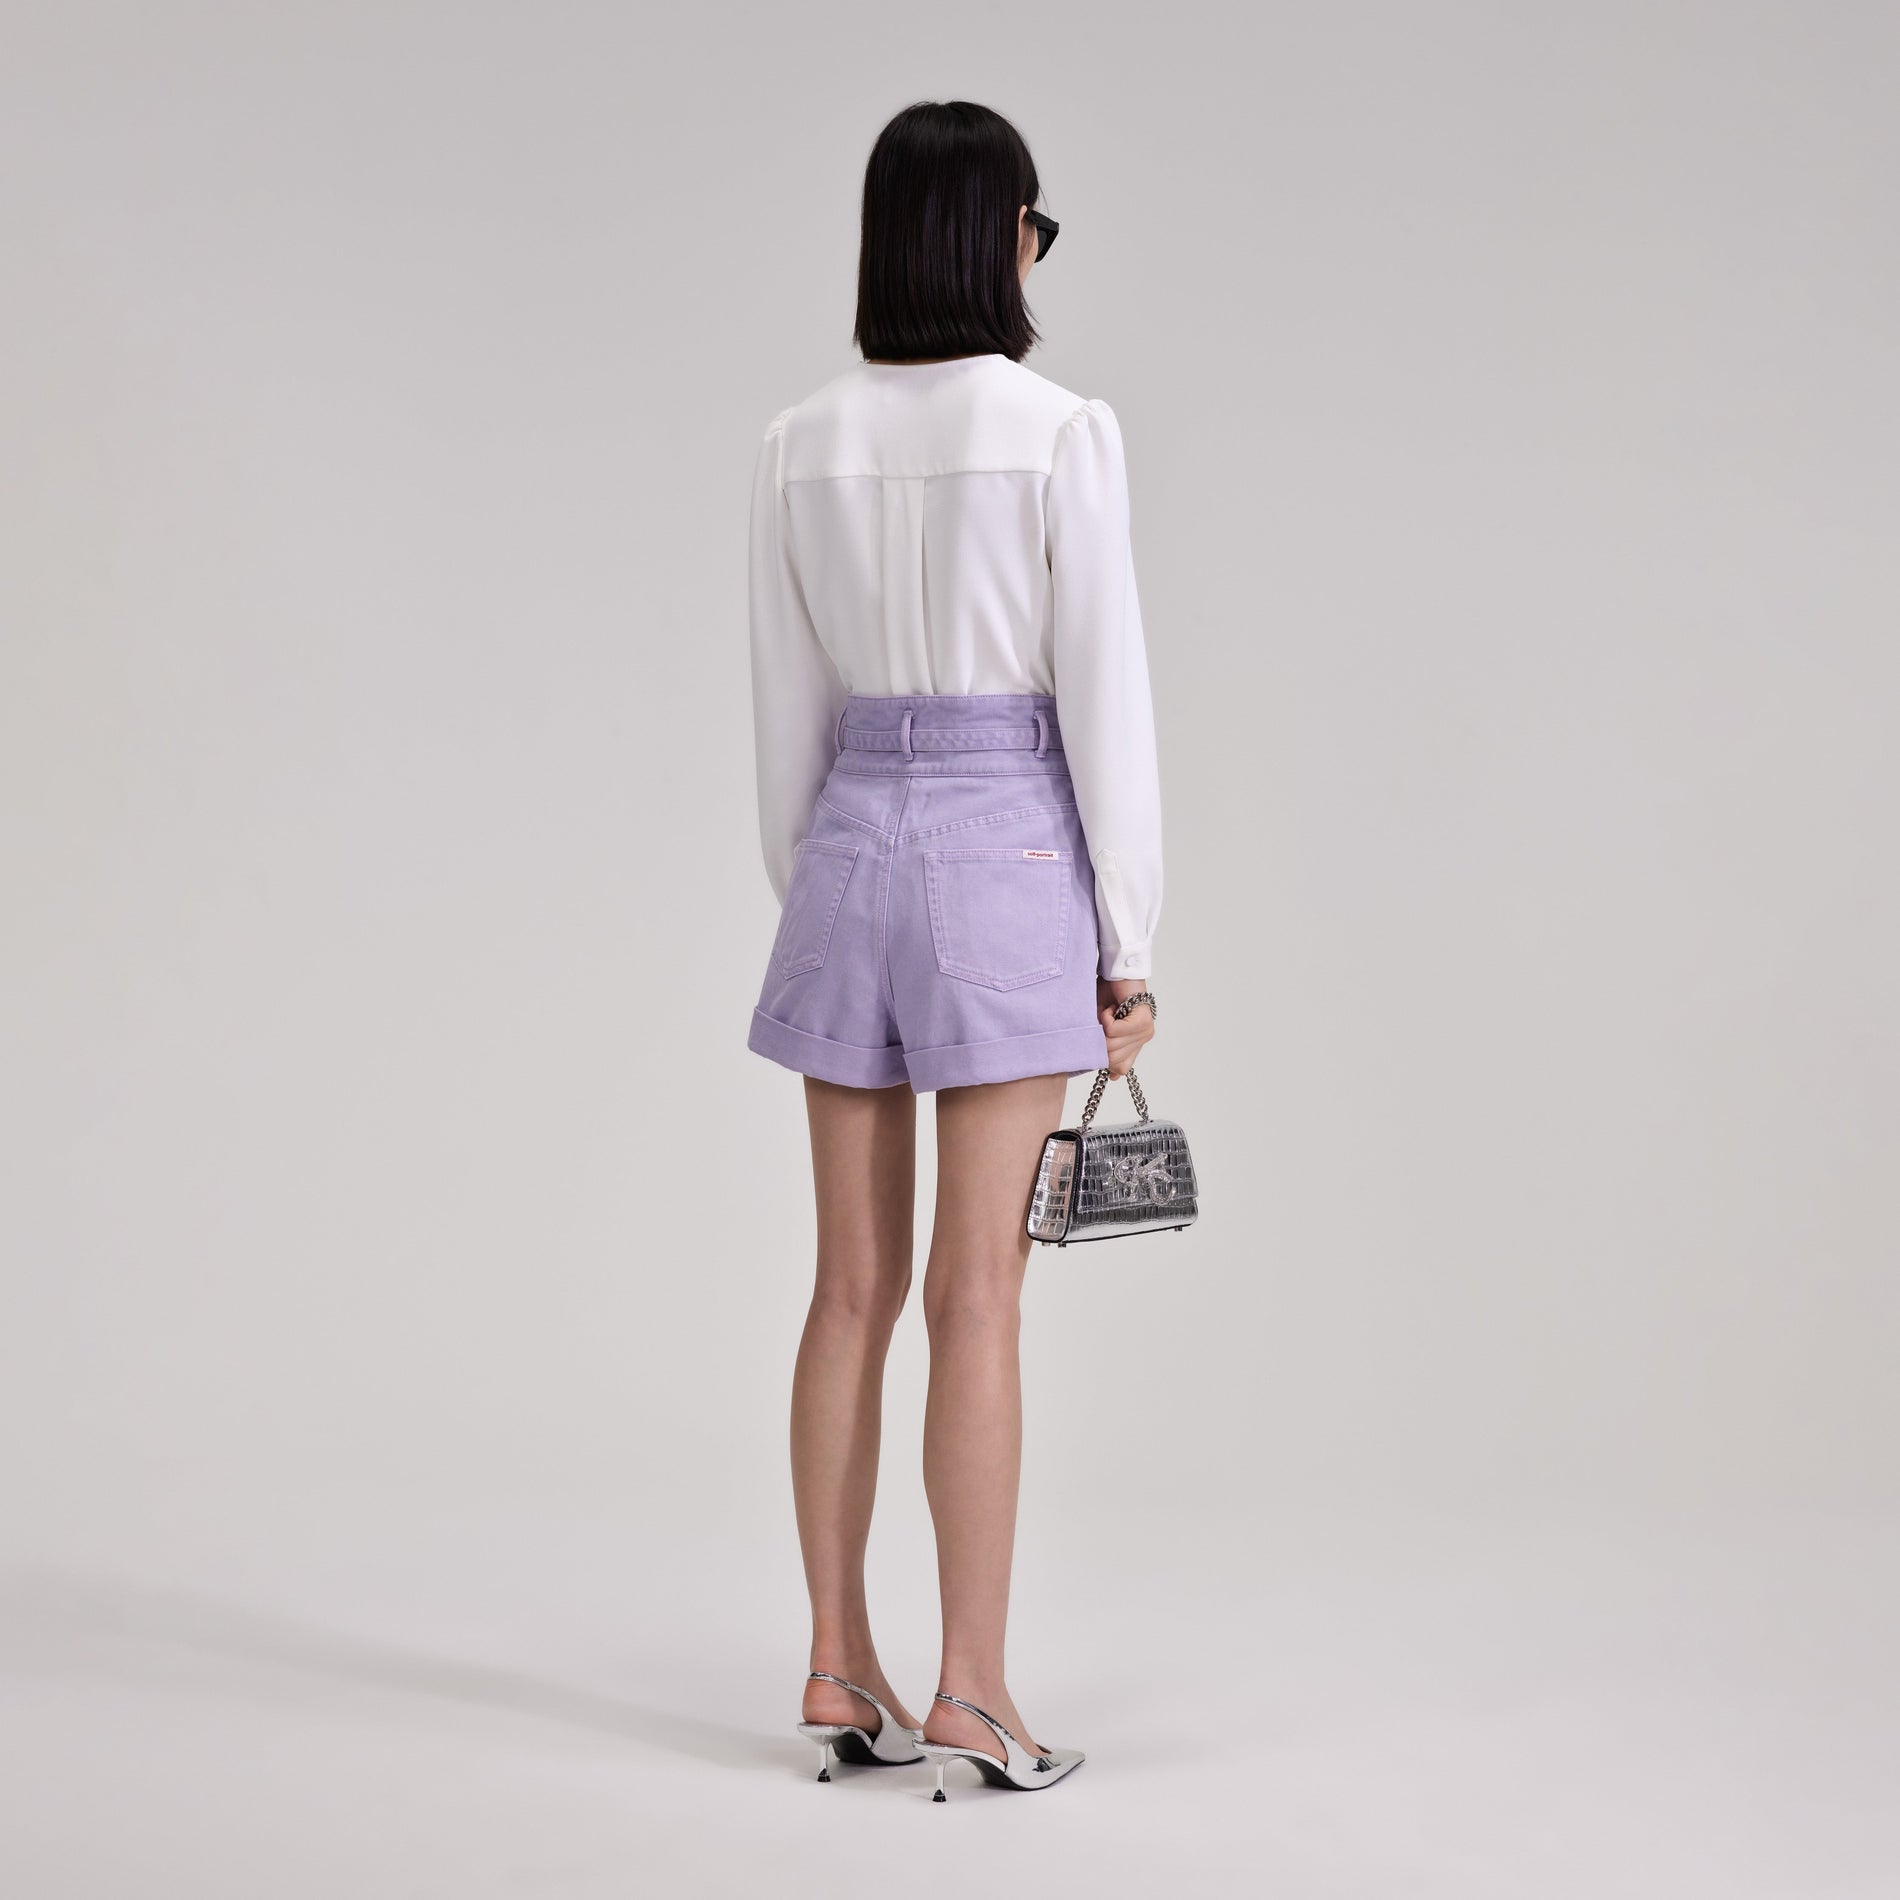 A woman wearing the Lilac Denim Shorts